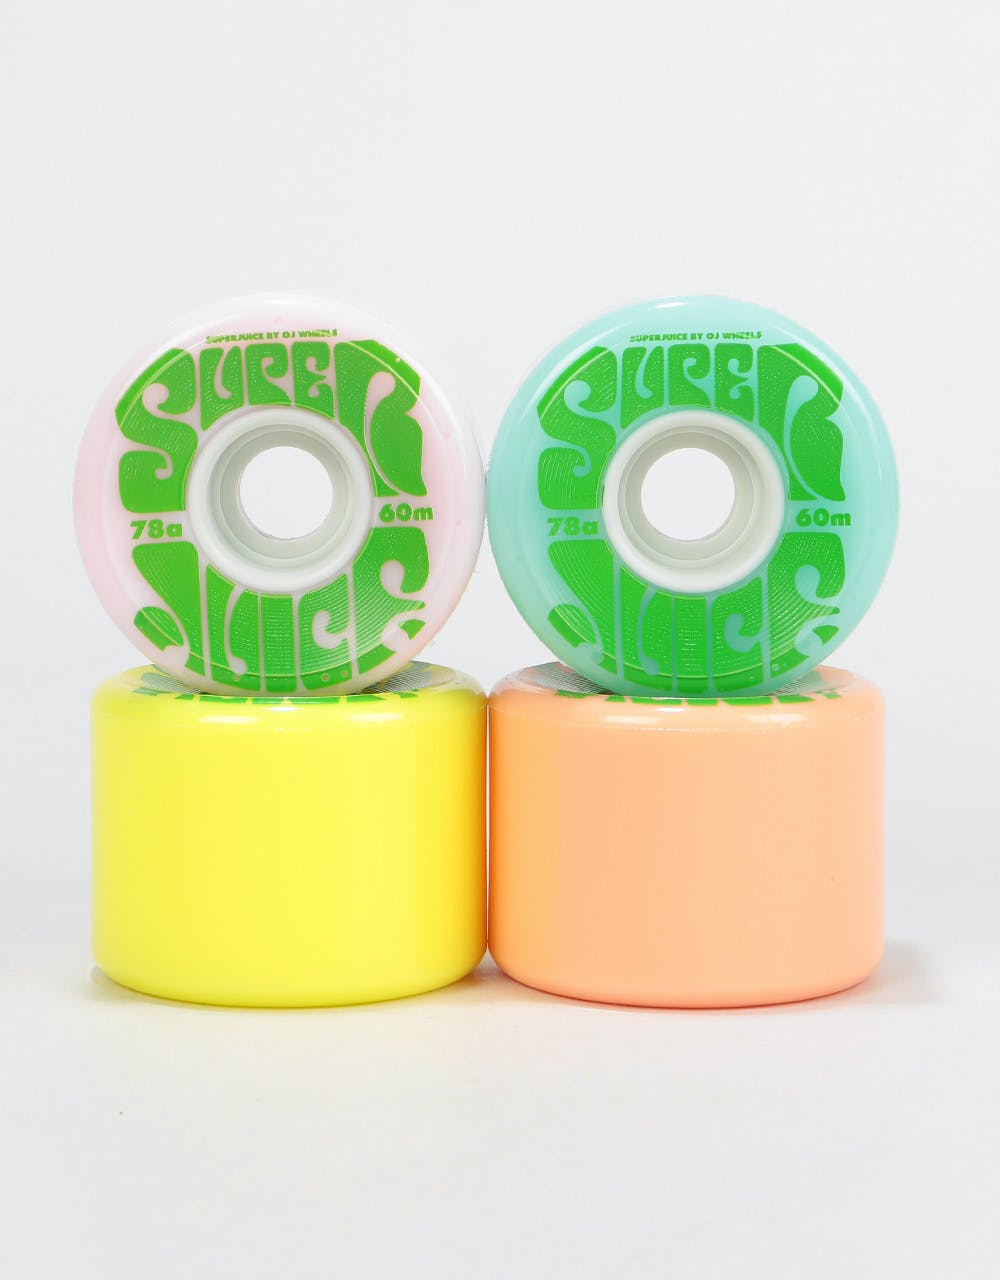 OJ Super Juice Mix 78a Skateboard Wheel - 60mm